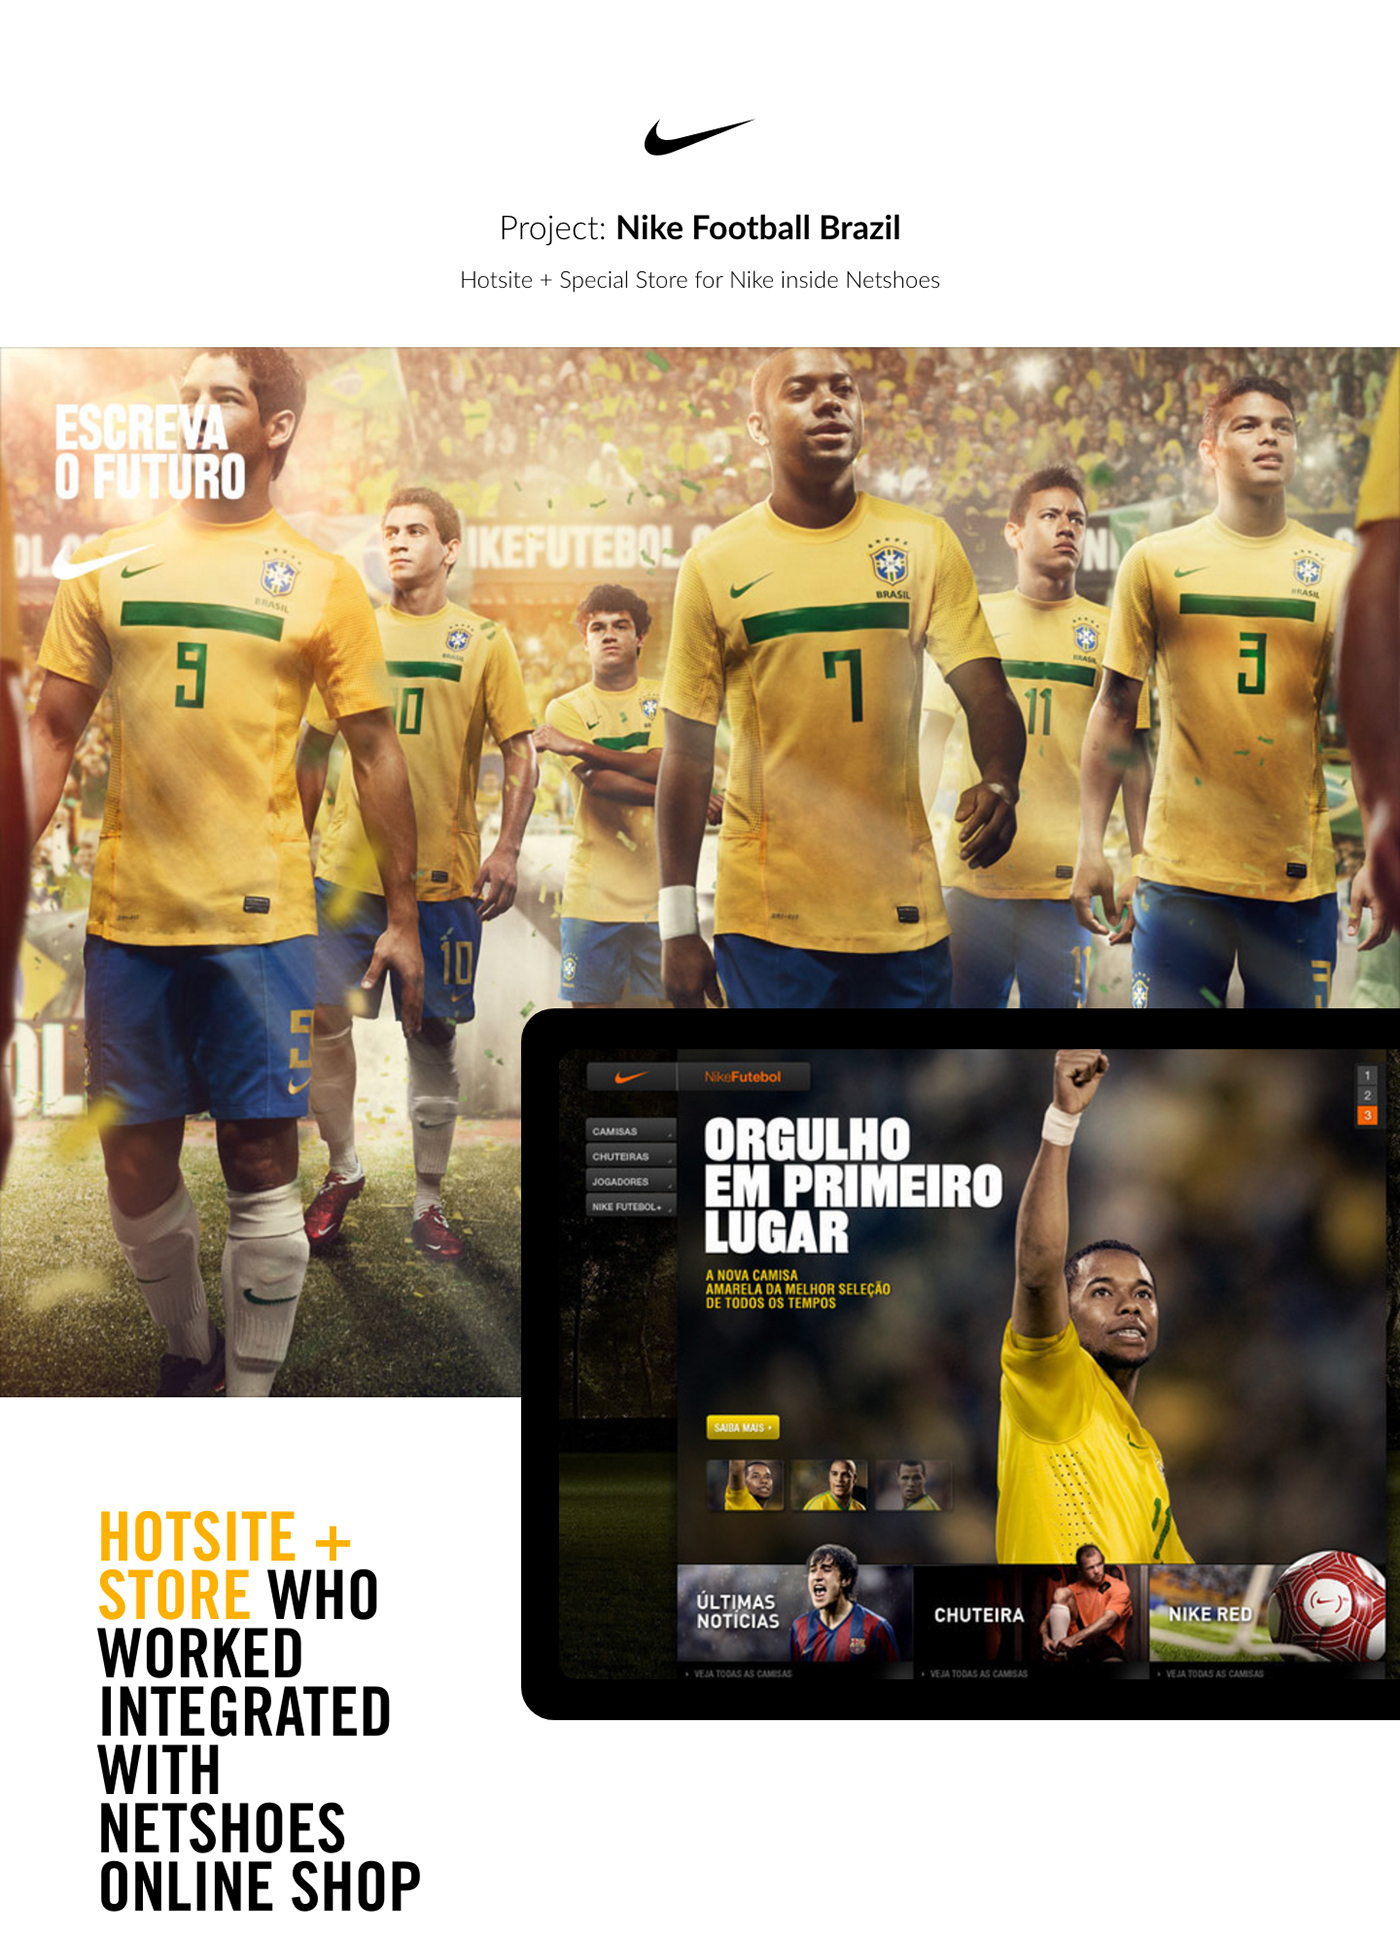 Nike nikefutebol Nikefootball nikebrasil Brazil soccer netshoes vancouver british columbia